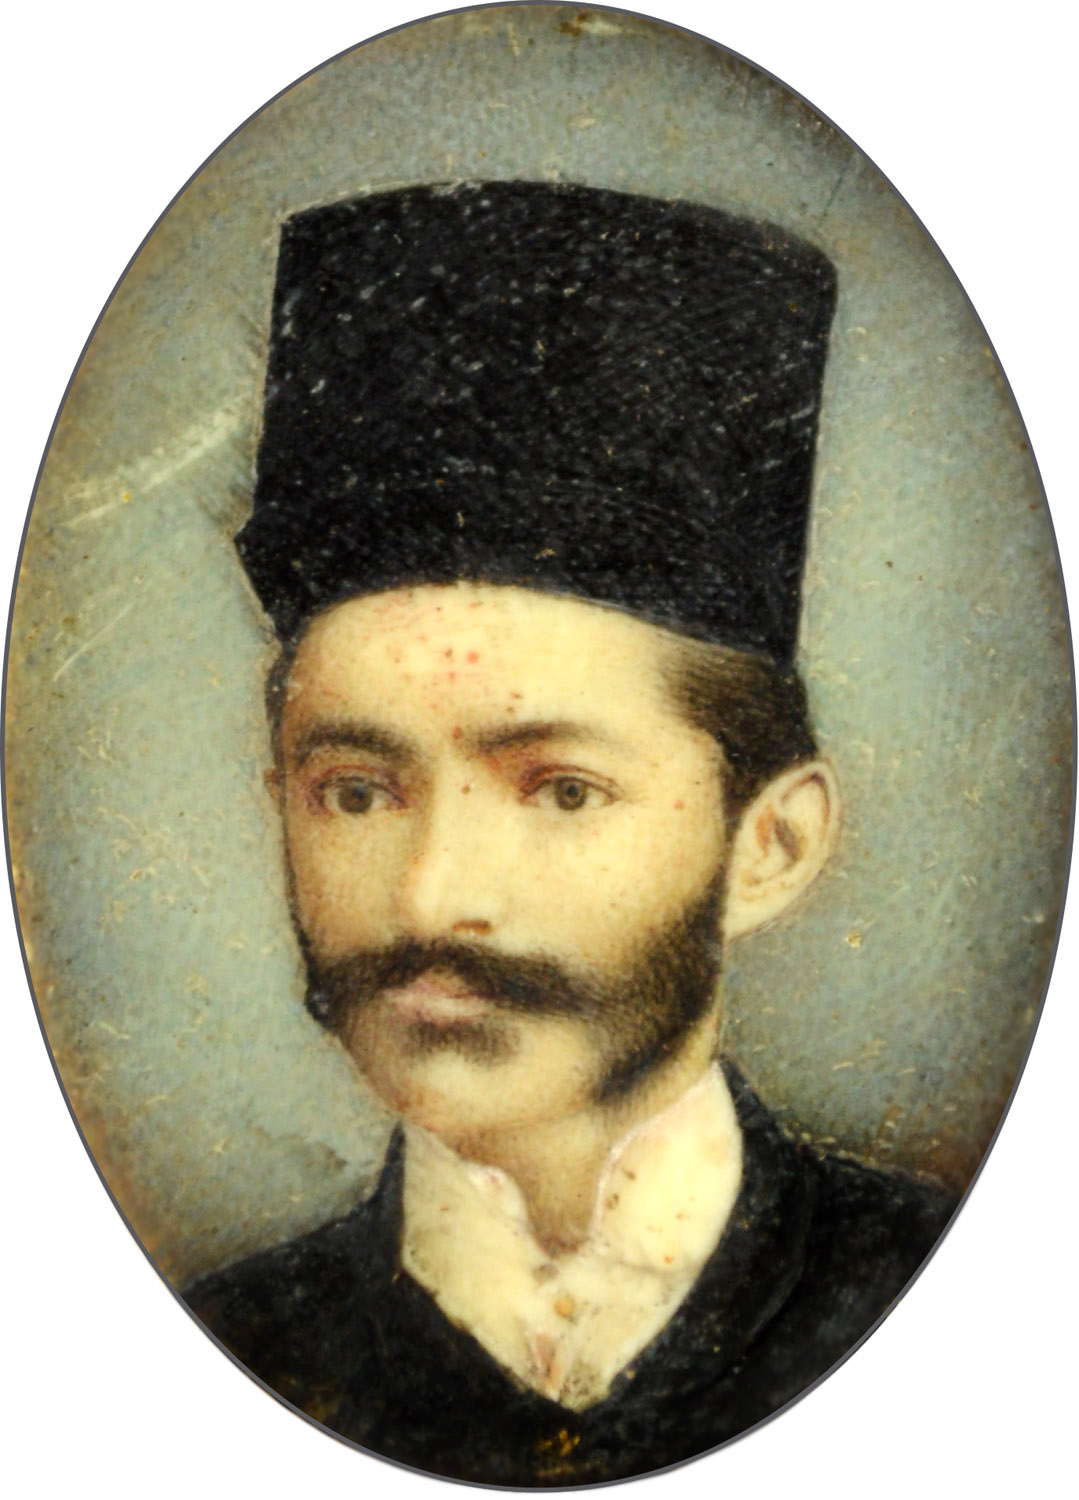 Mr. Dinshah Ardesir Taleyarkhan